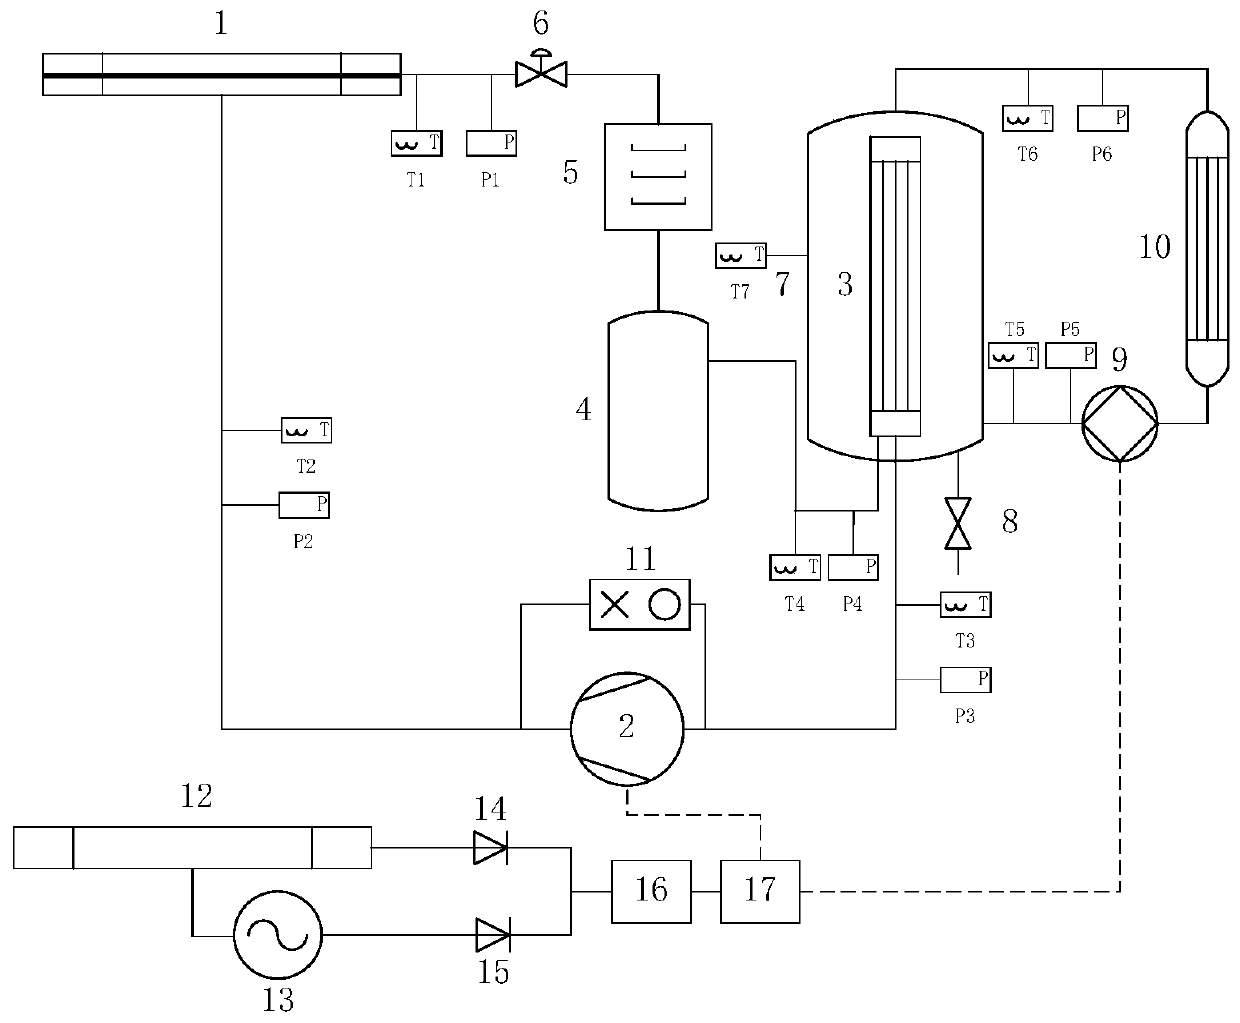 Control method of heat pump system